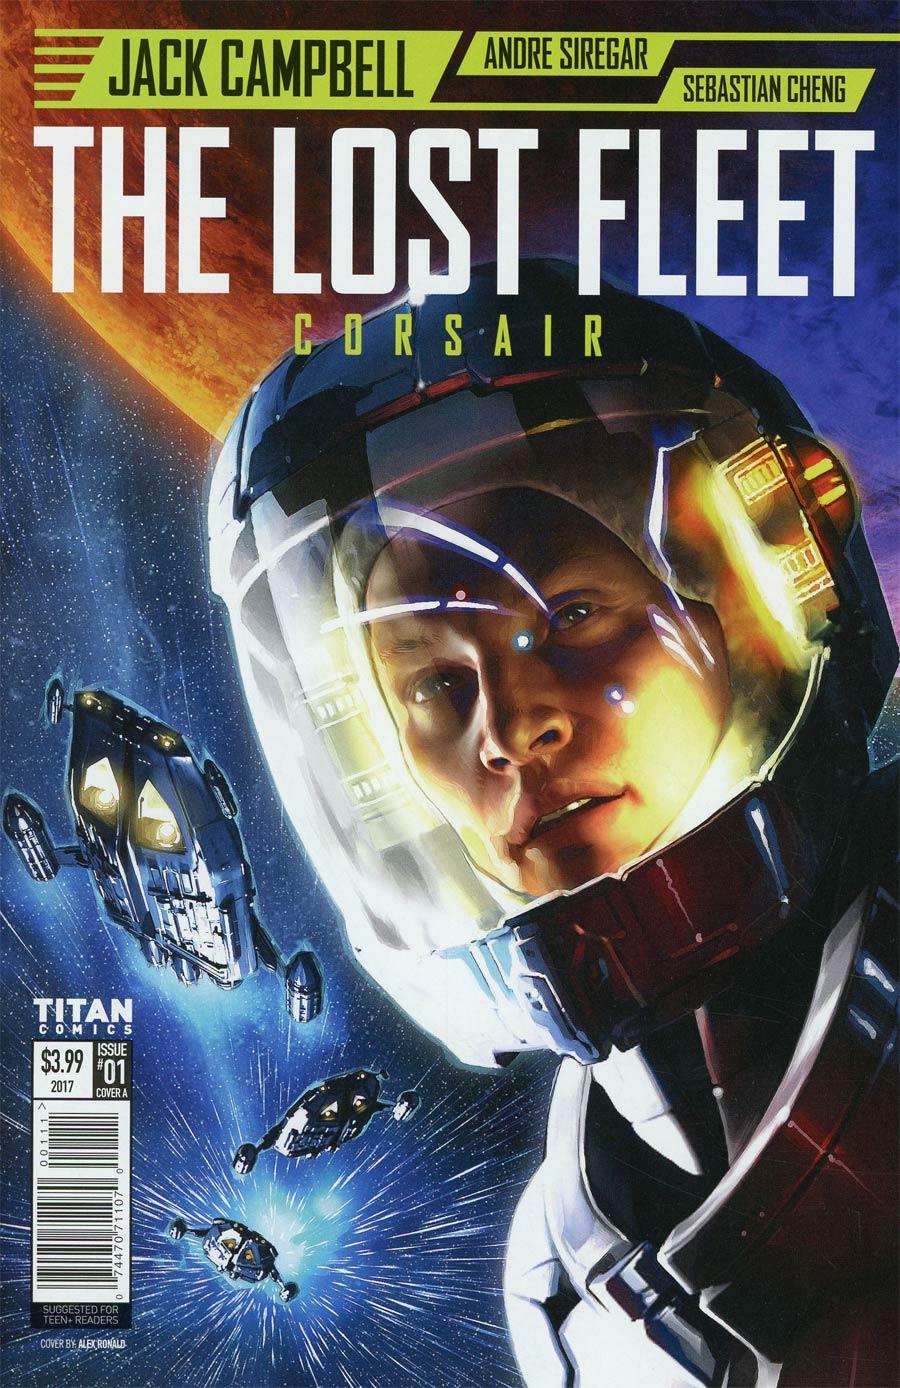 Lost Fleet Corsair Vol. 1 #1